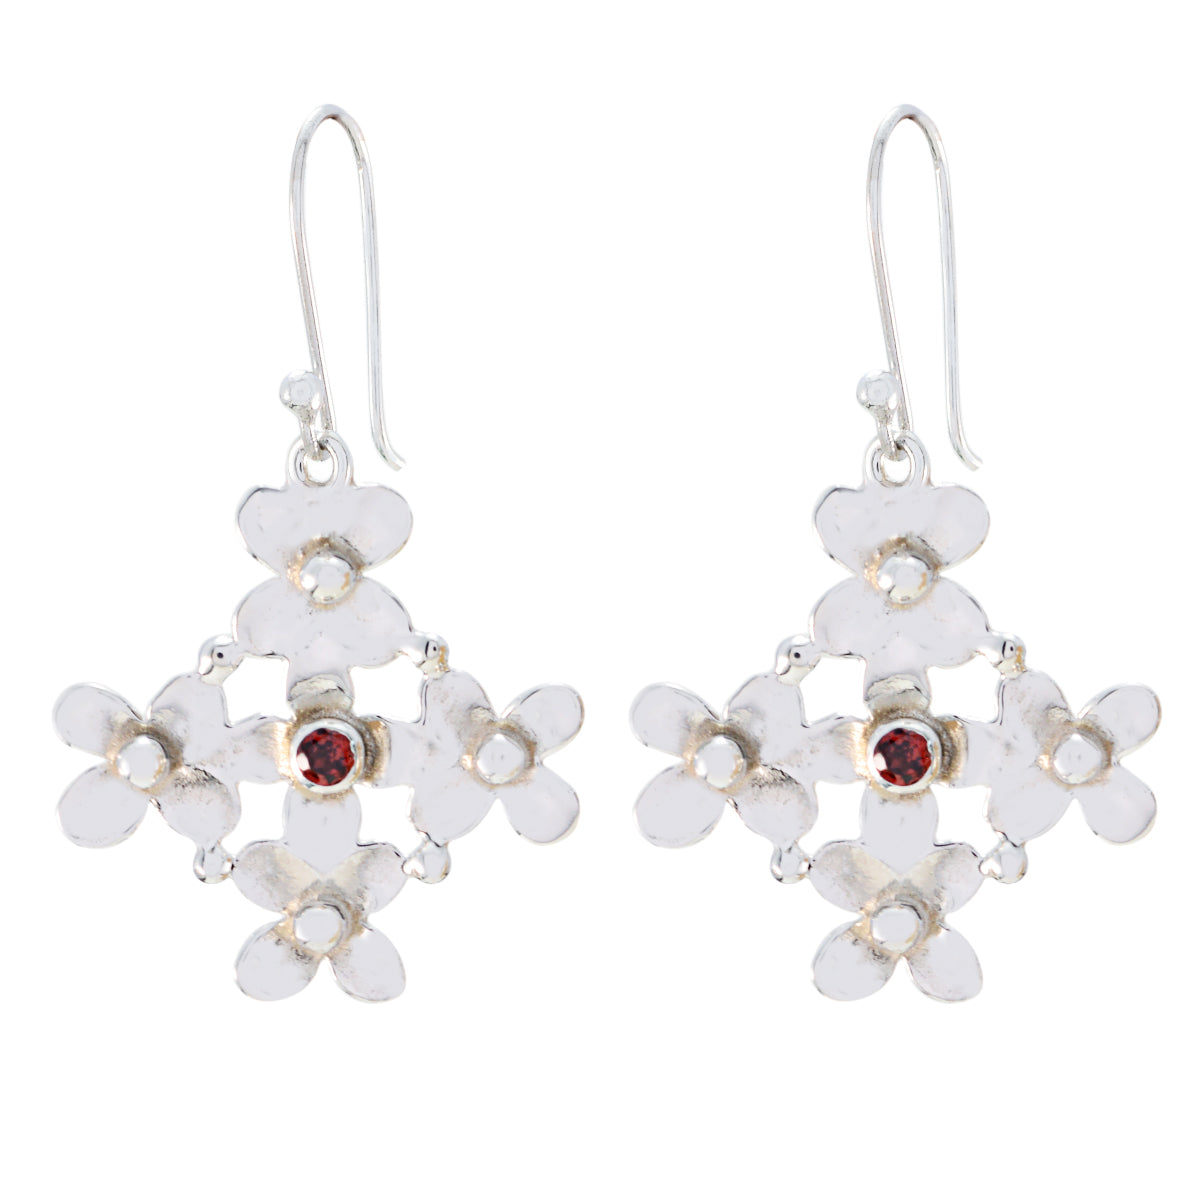 Riyo Genuine Gems round Faceted Red Garnet Silver Earrings gift for brithday